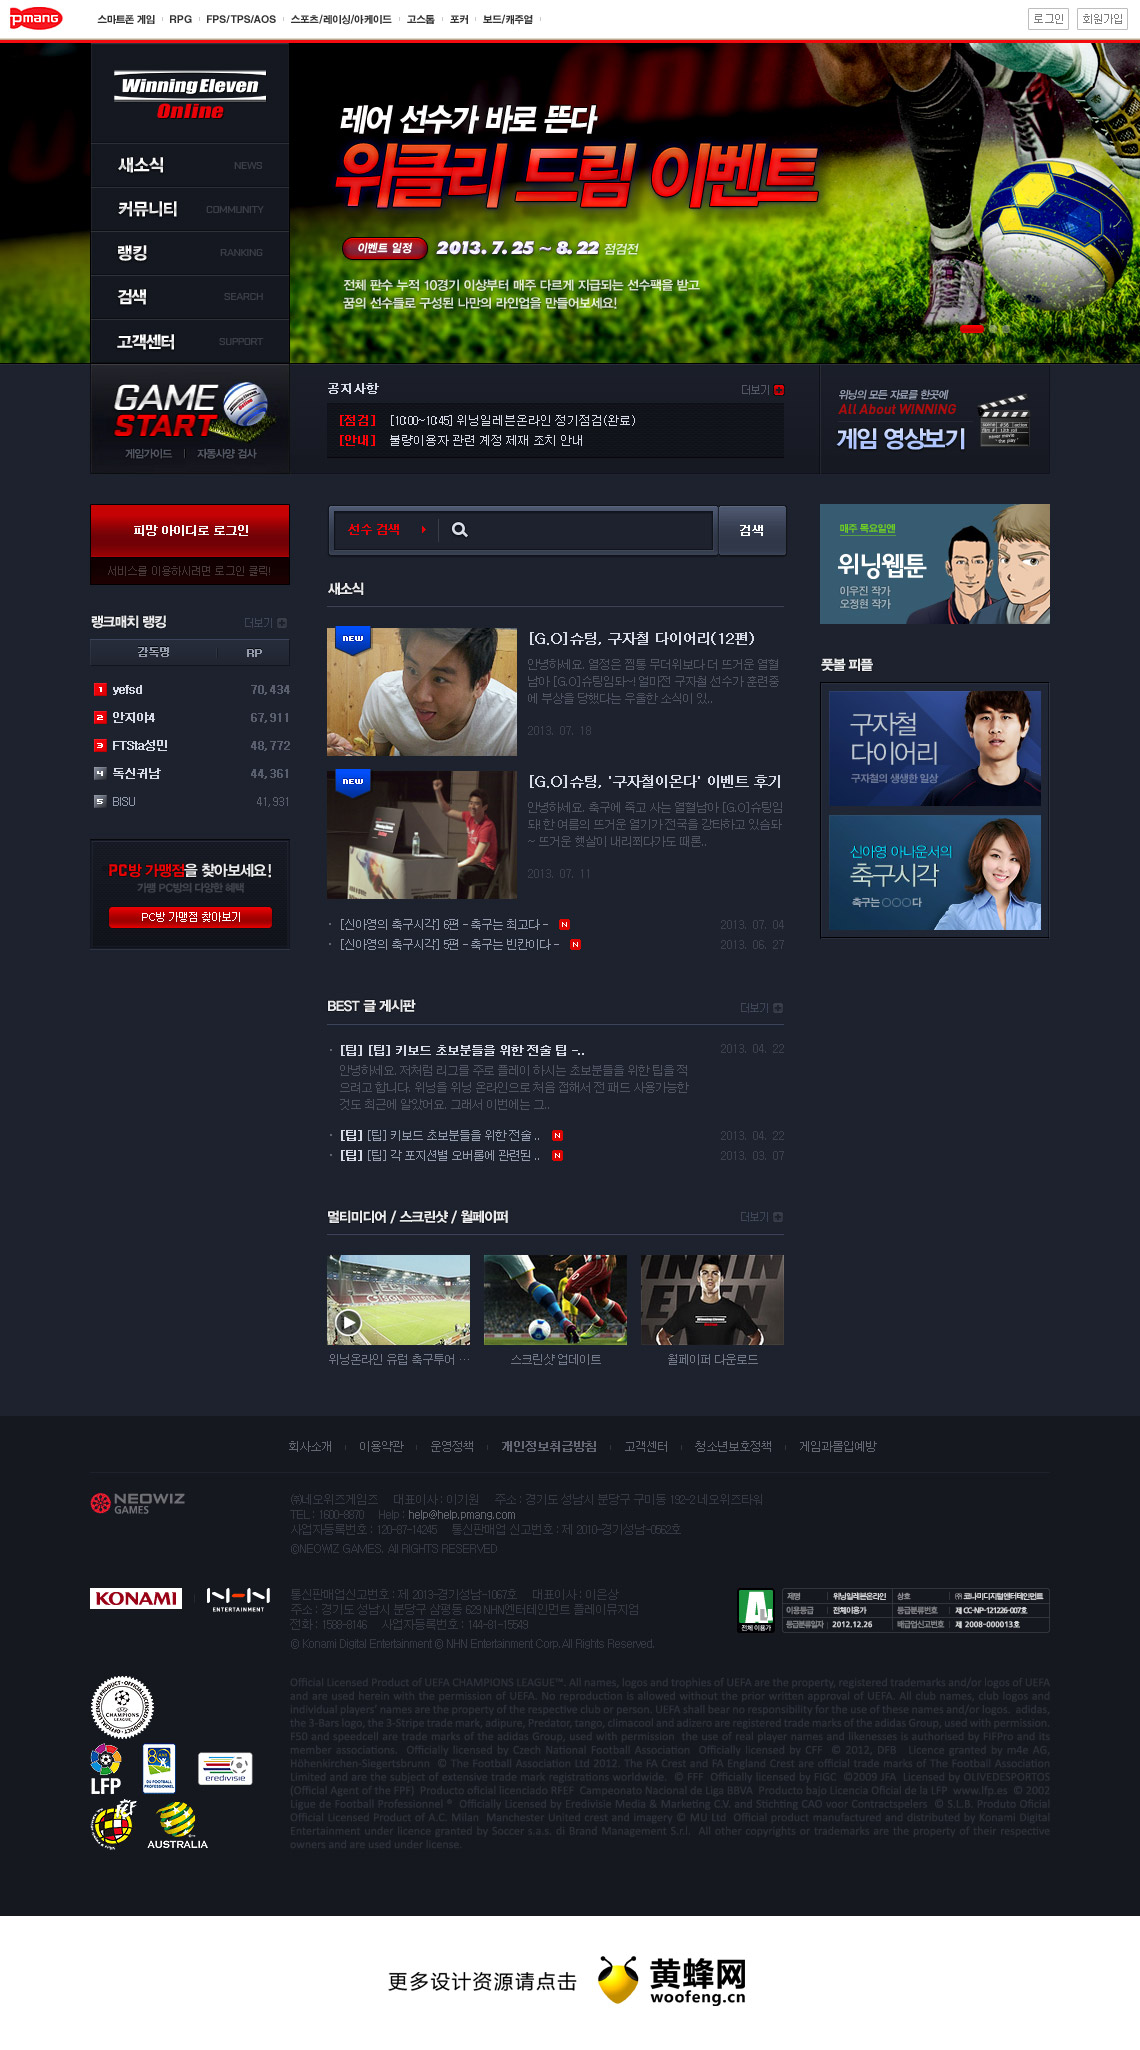 Winning Eleven Online游戏官方网站，来源自黄蜂网https://woofeng.cn/